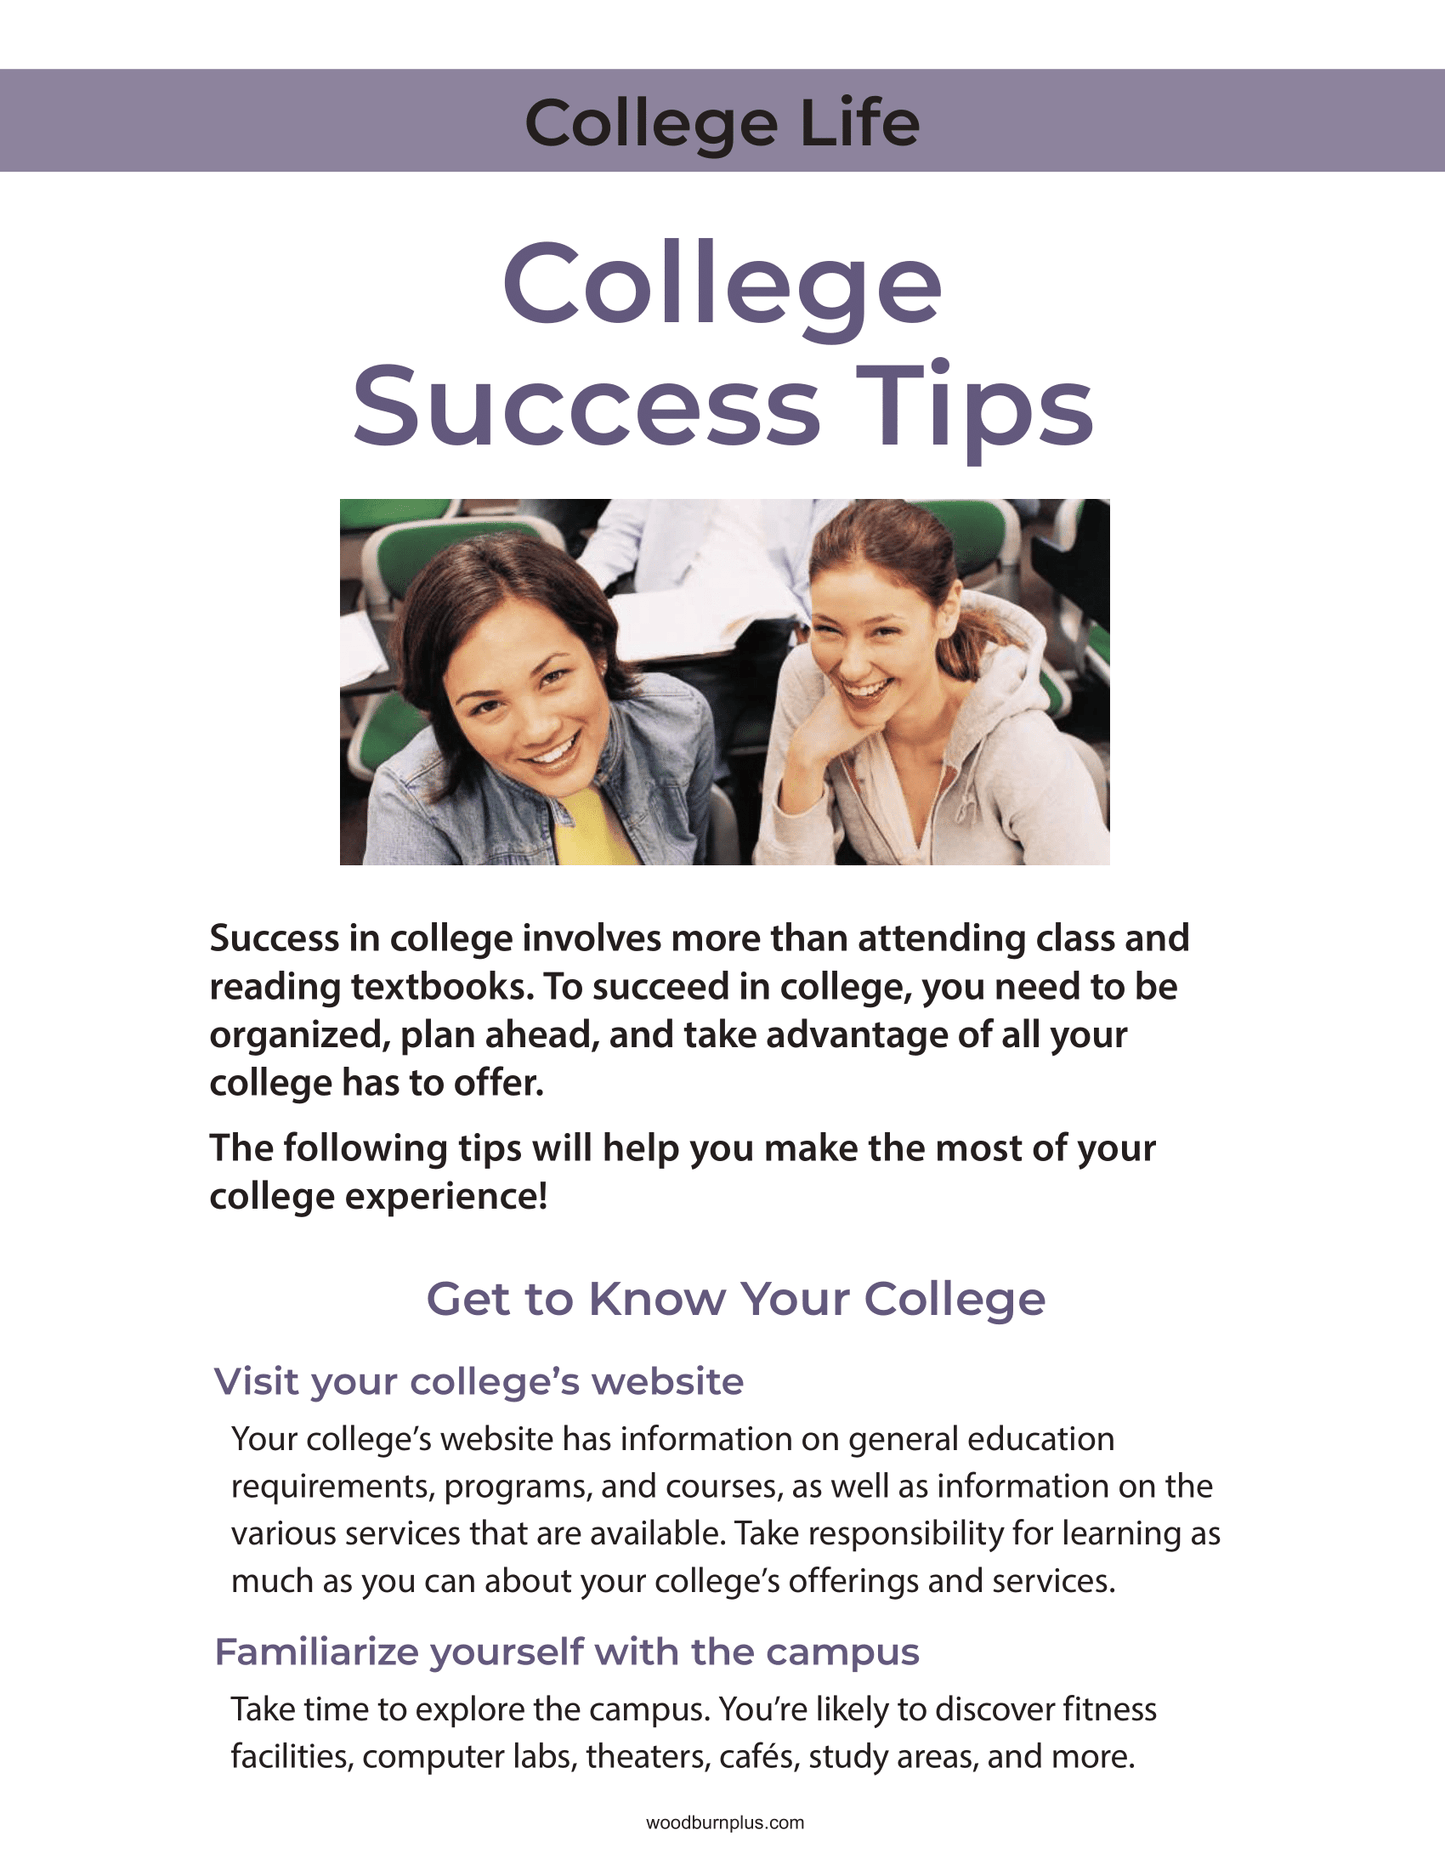 College Life - College Success Tips